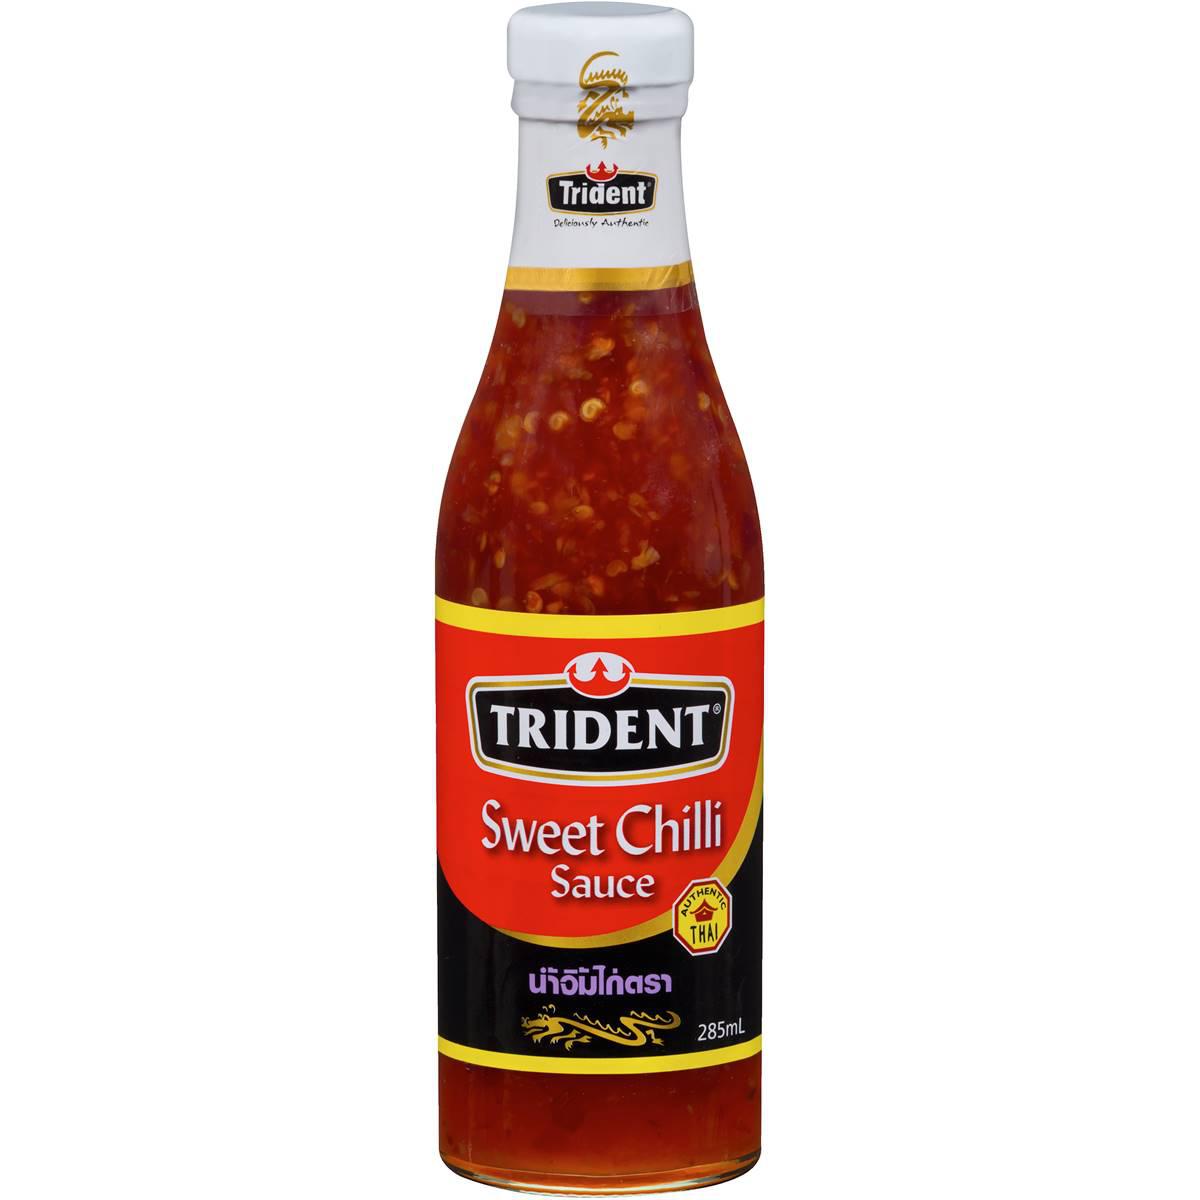 Trident Chilli Sauce Sweet Chilli 285ml